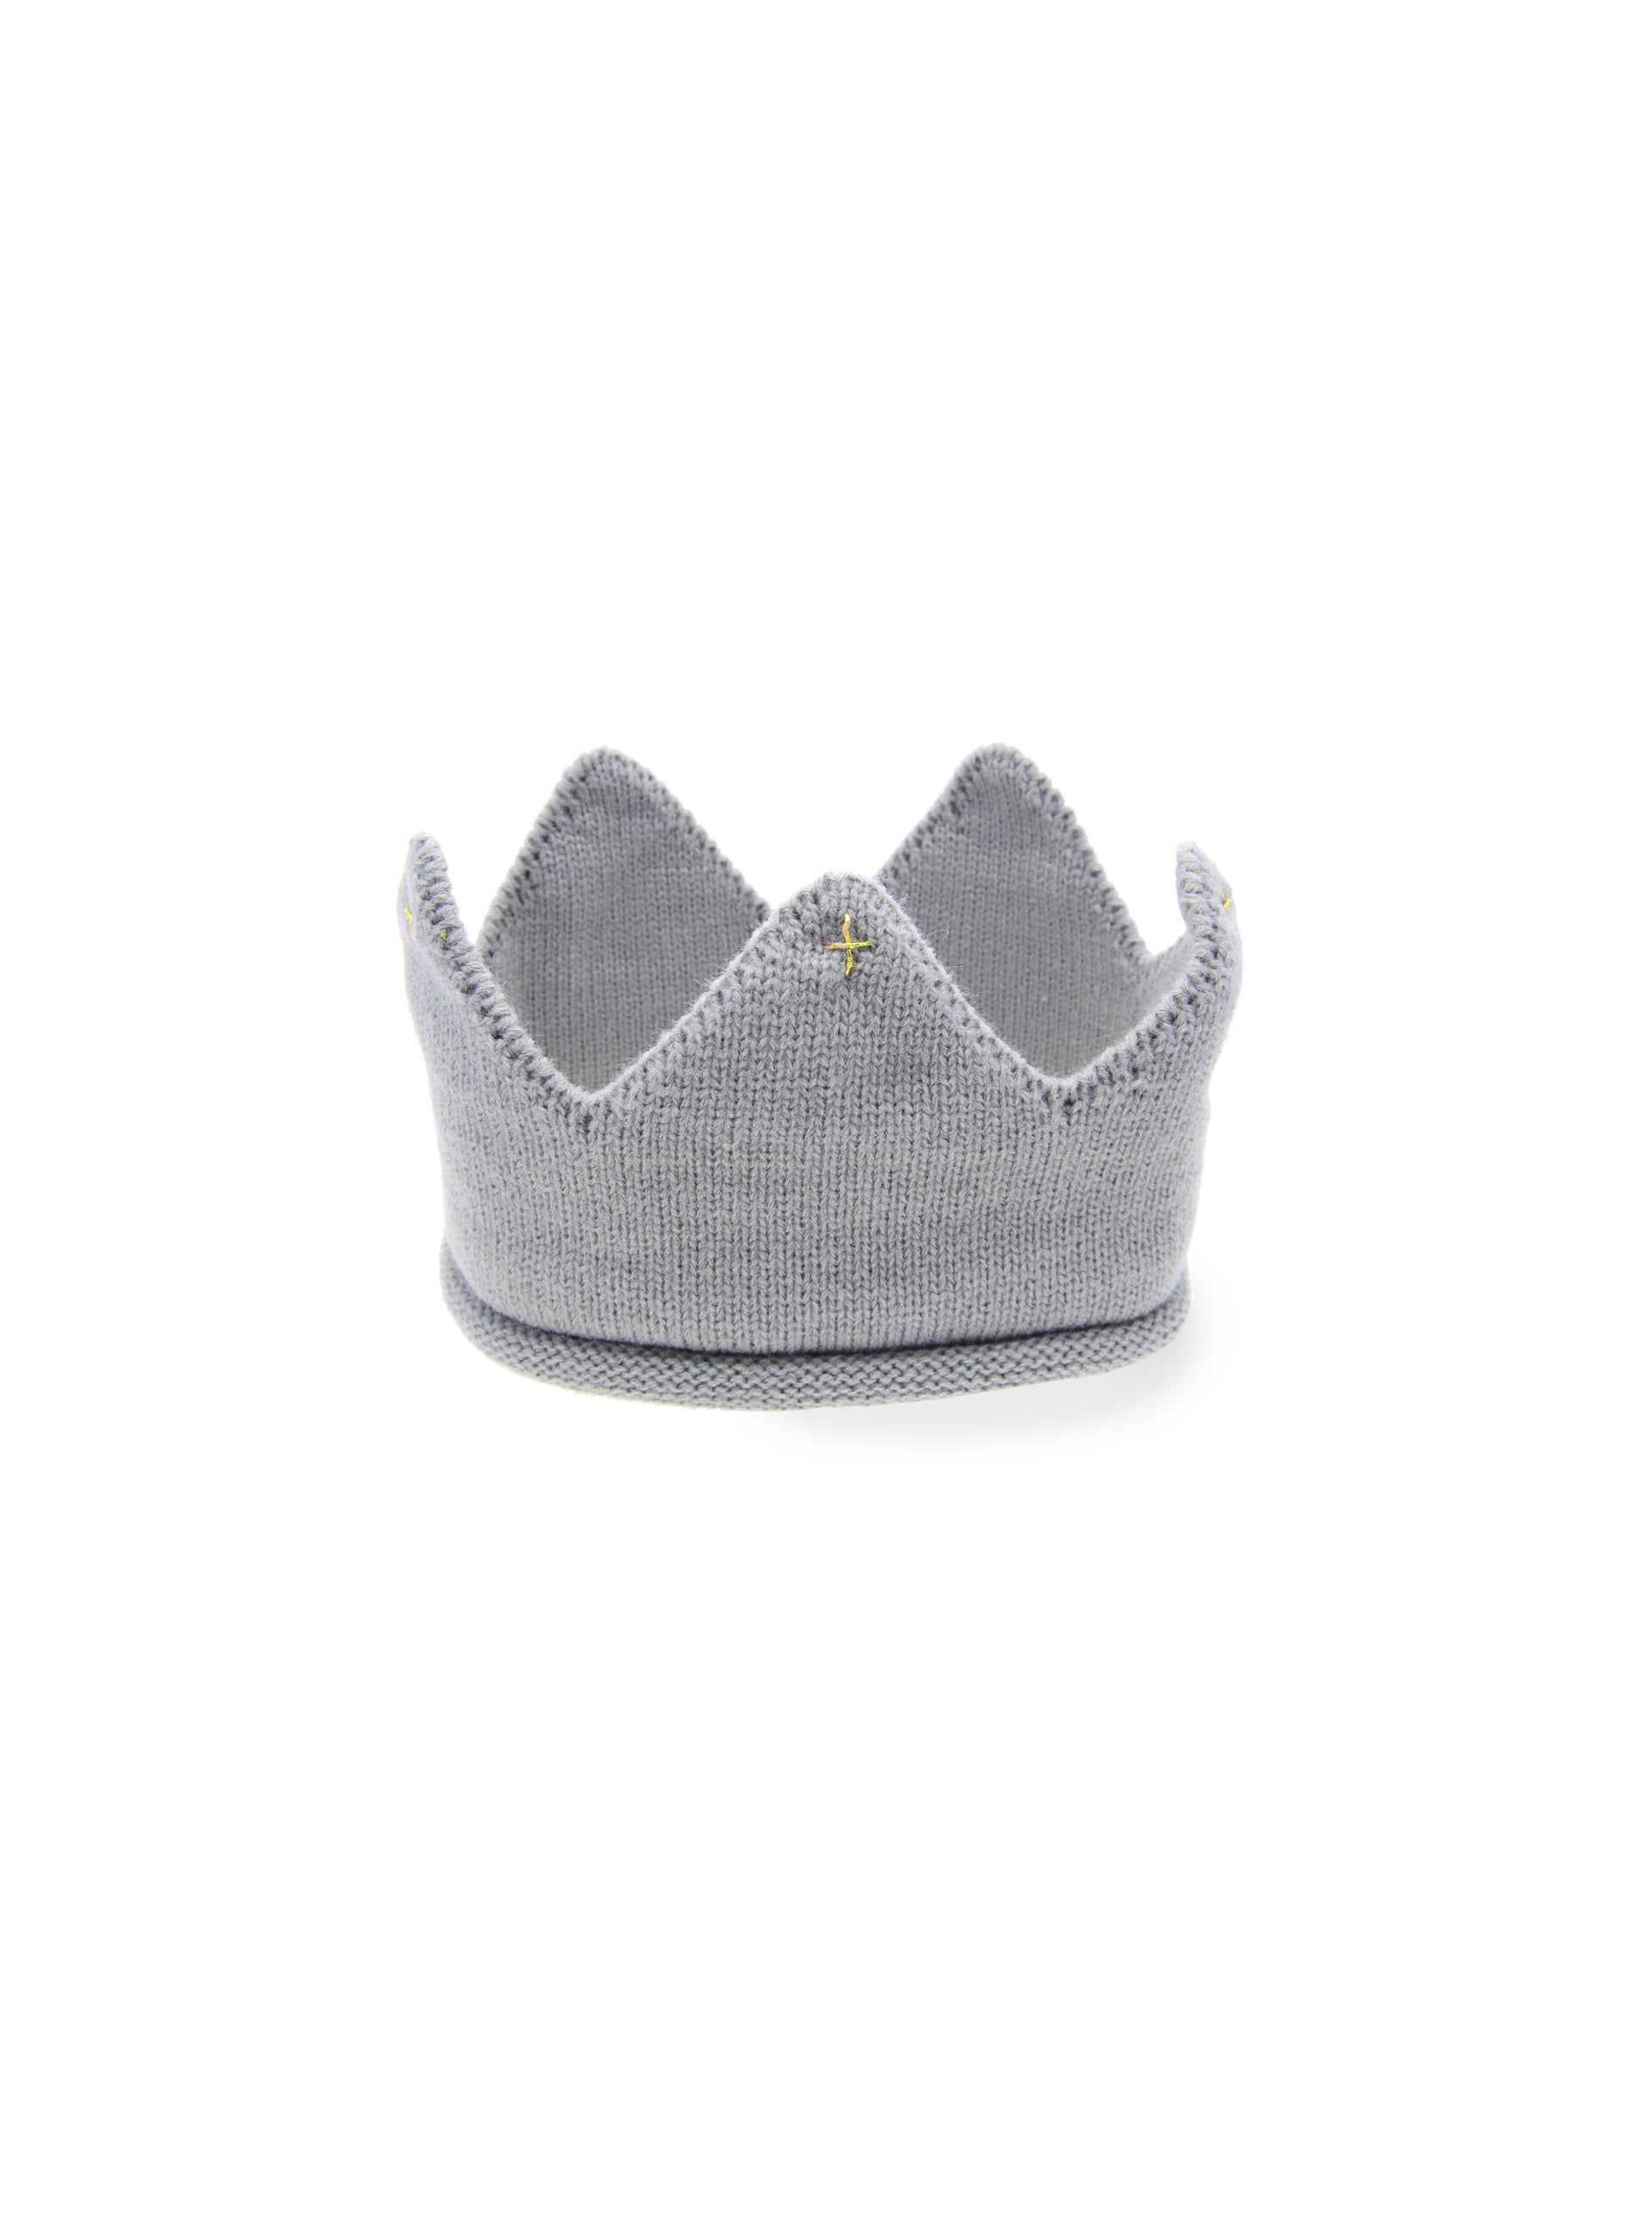 prince/princess woodland grey crown